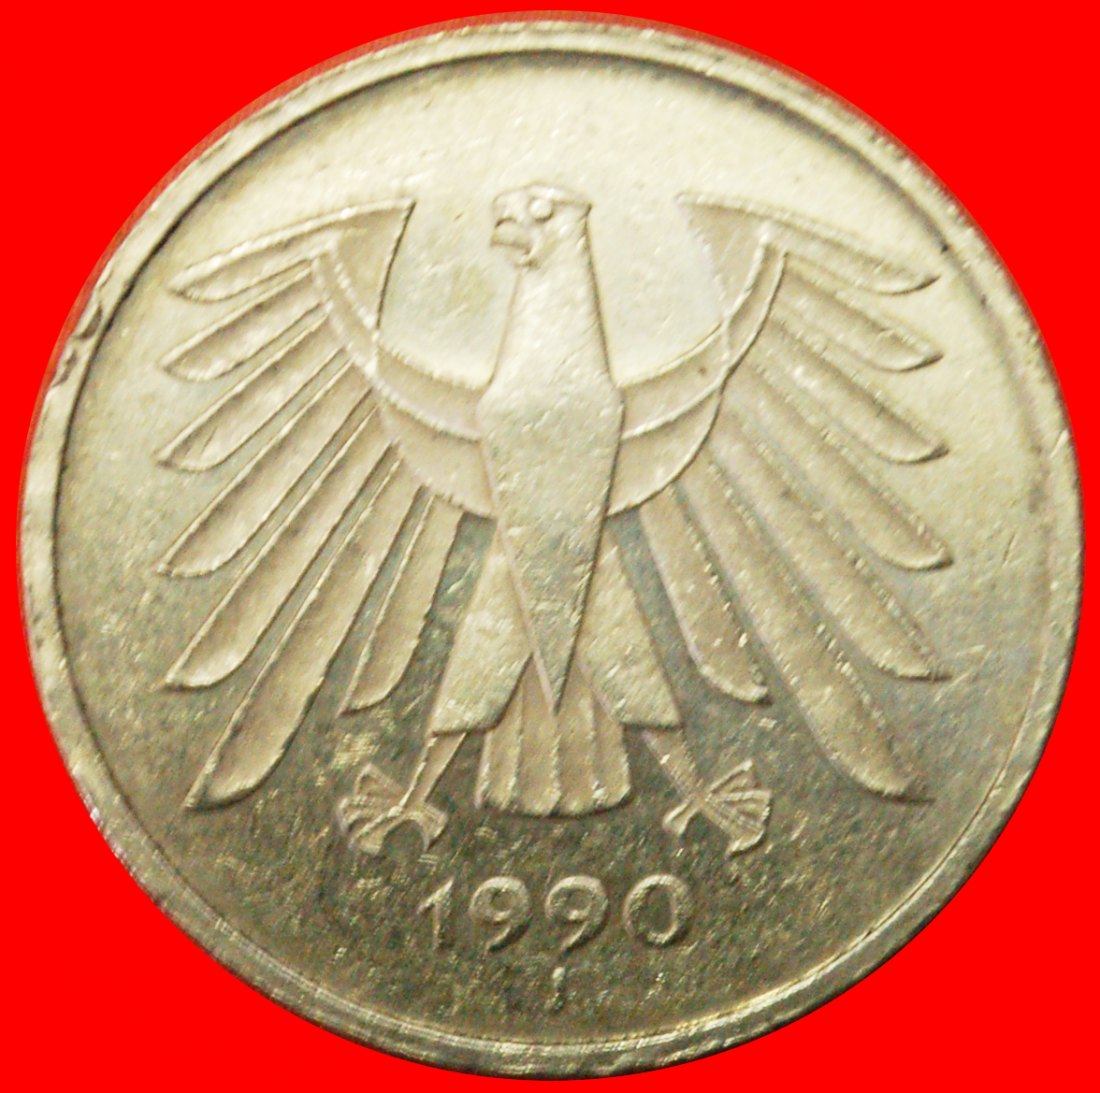  # EAGLE: GERMANY ★ 5 MARKS 1990J! LOW START ★ NO RESERVE!   